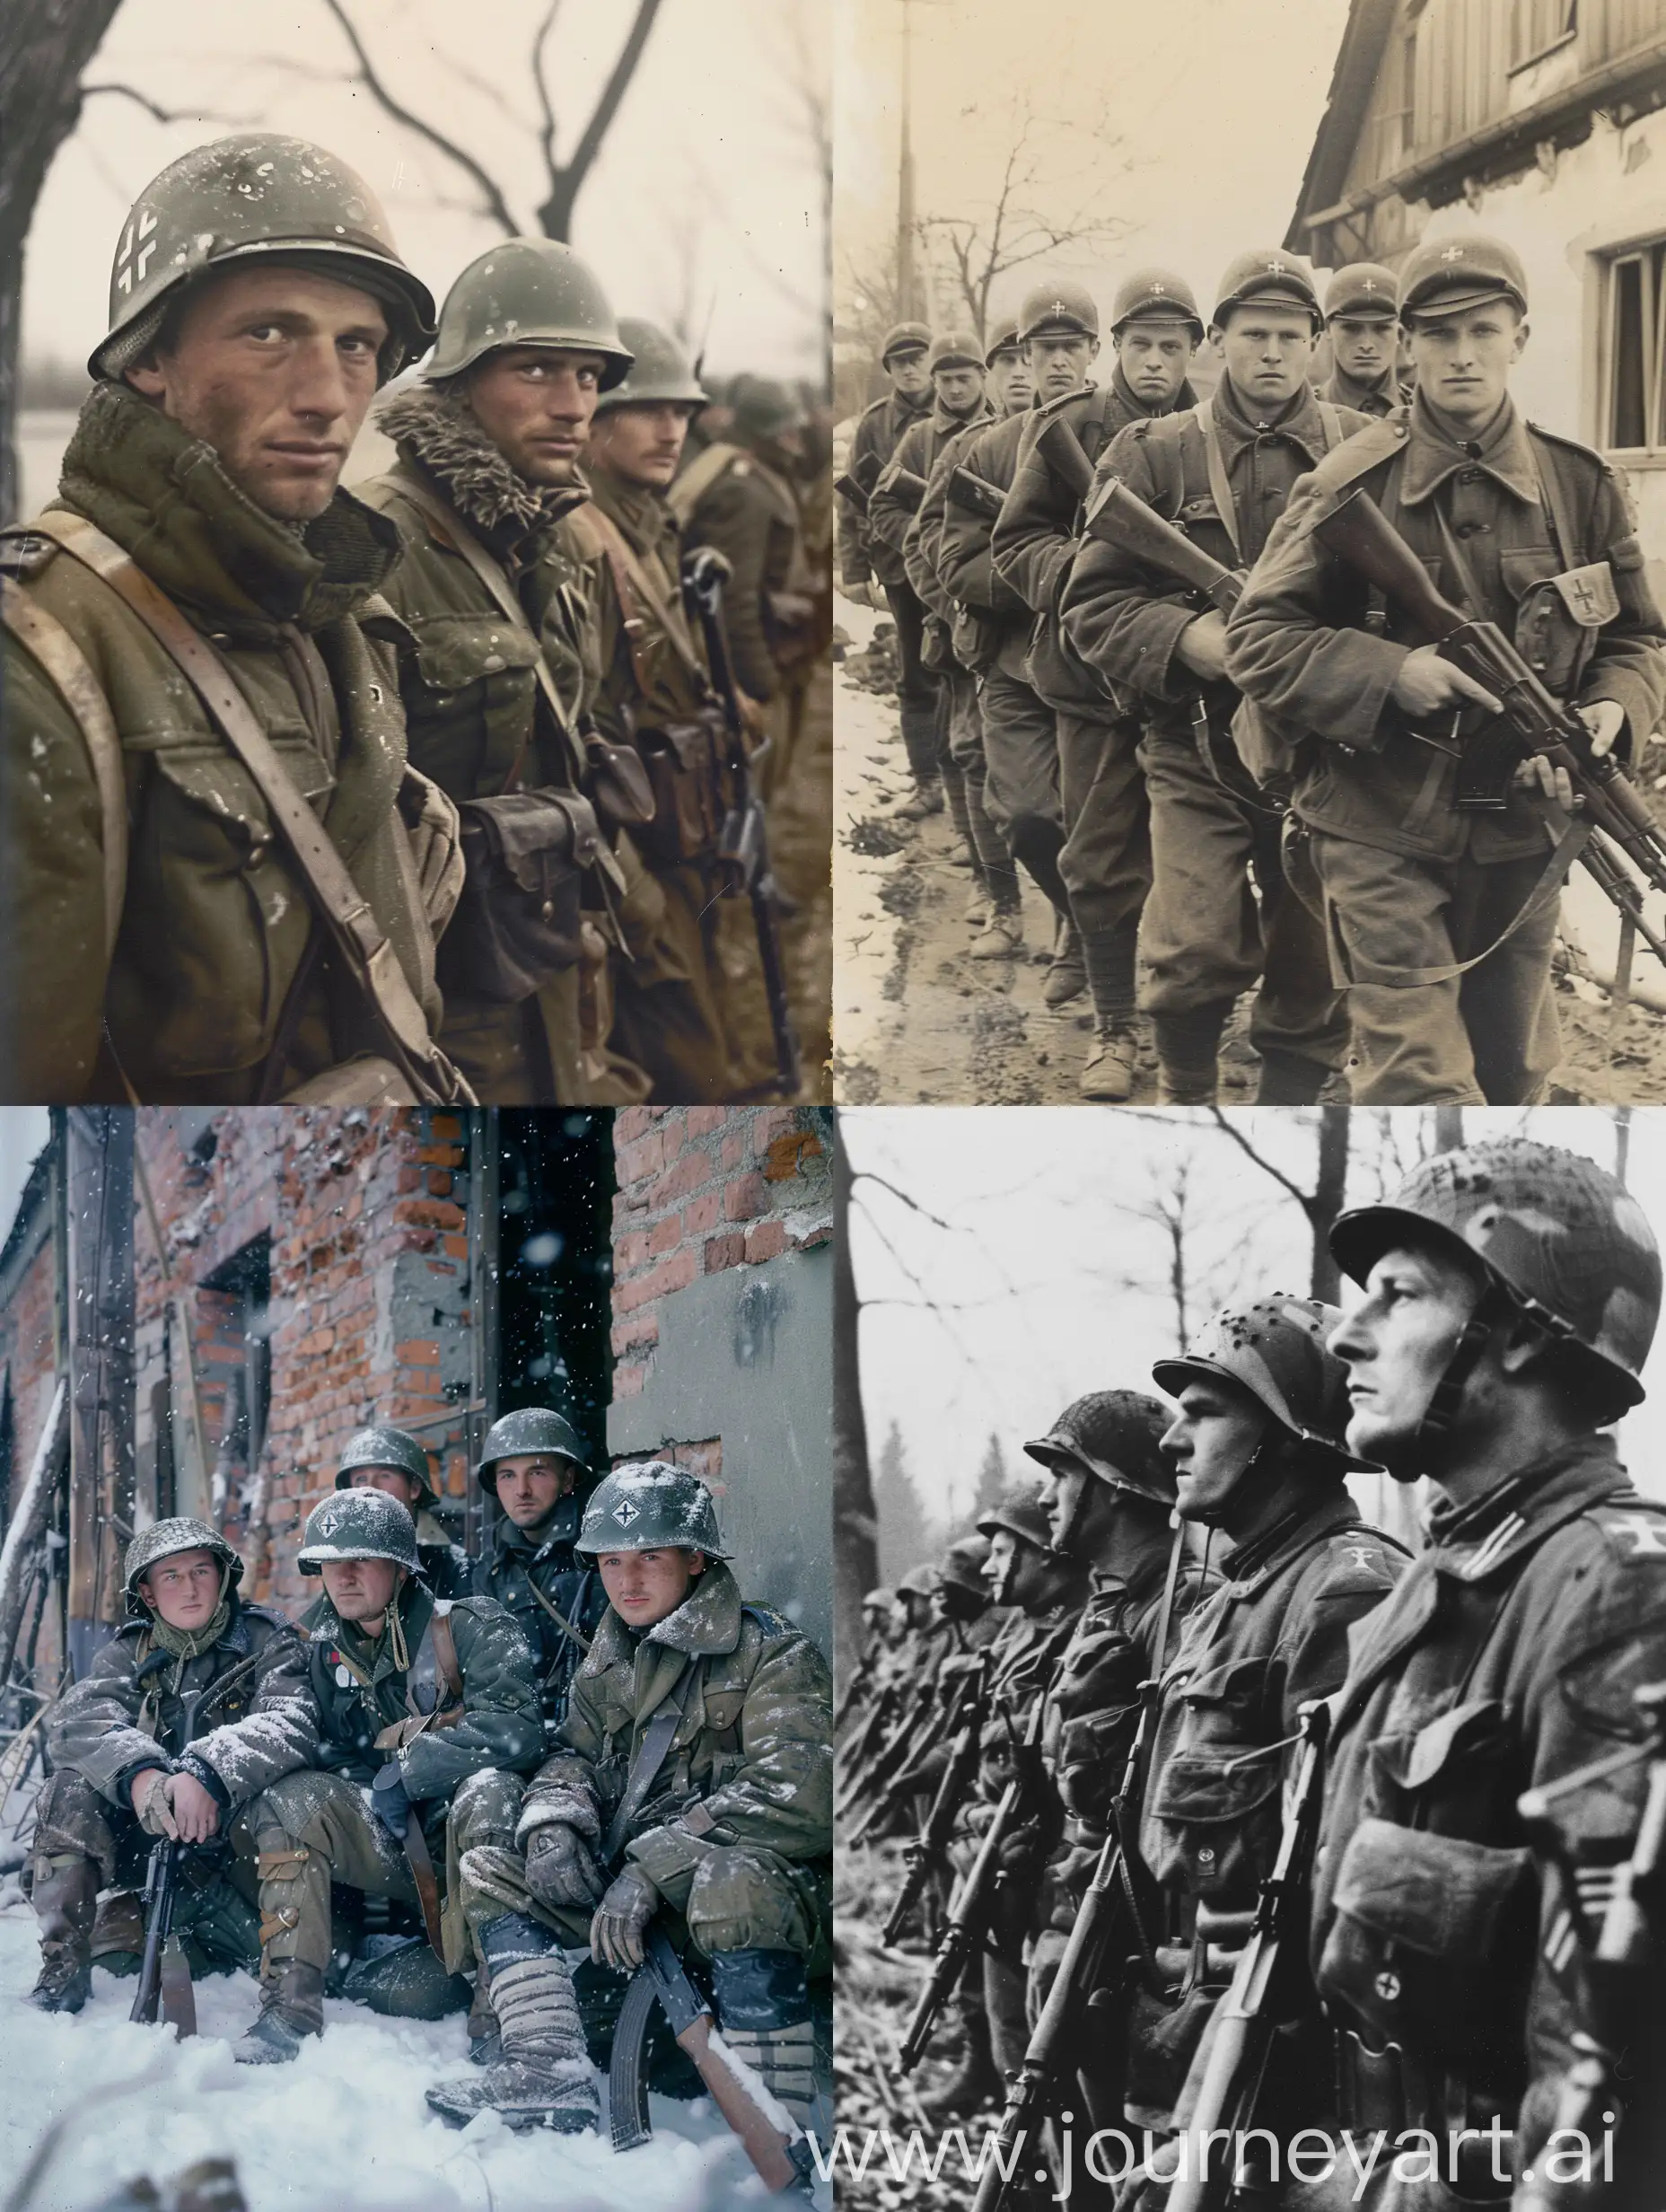 1943-German-Soldiers-in-Vintage-Photograph